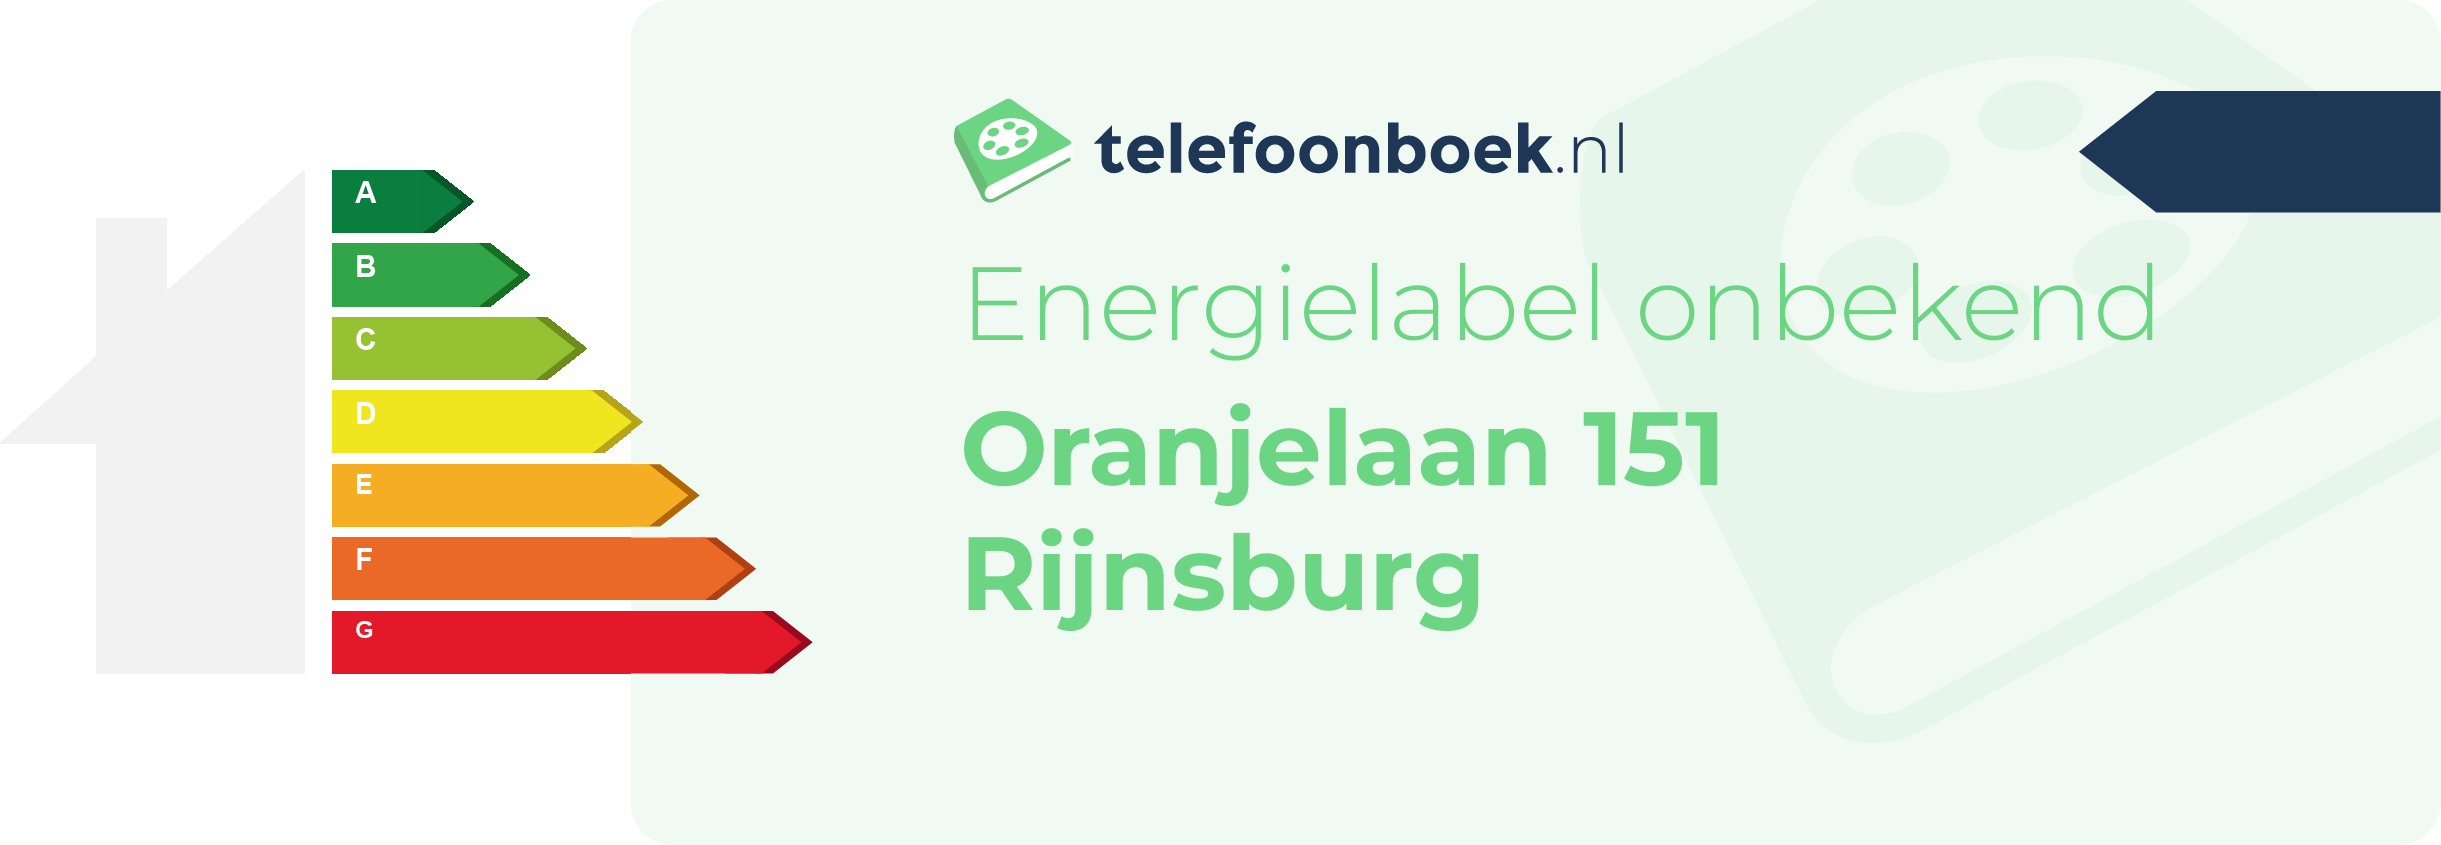 Energielabel Oranjelaan 151 Rijnsburg